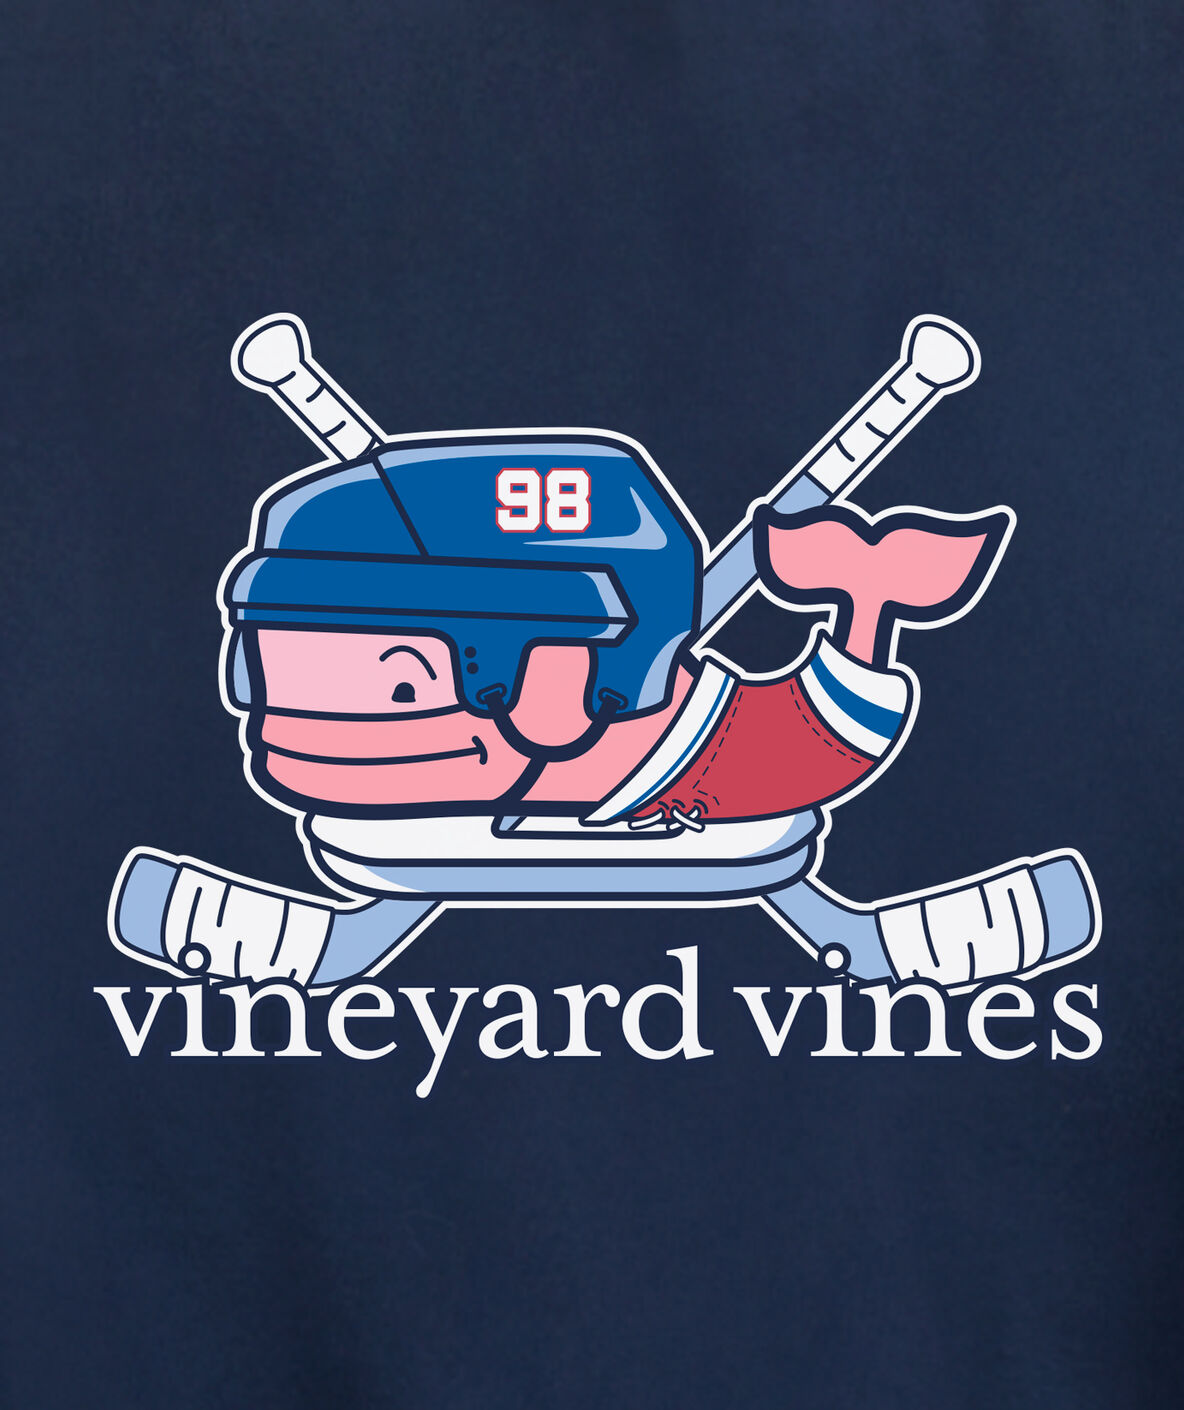 vineyard vines Men's Vineyard Vines White San Jose Sharks Hockey Helmet  Pocket Long Sleeve T-Shirt